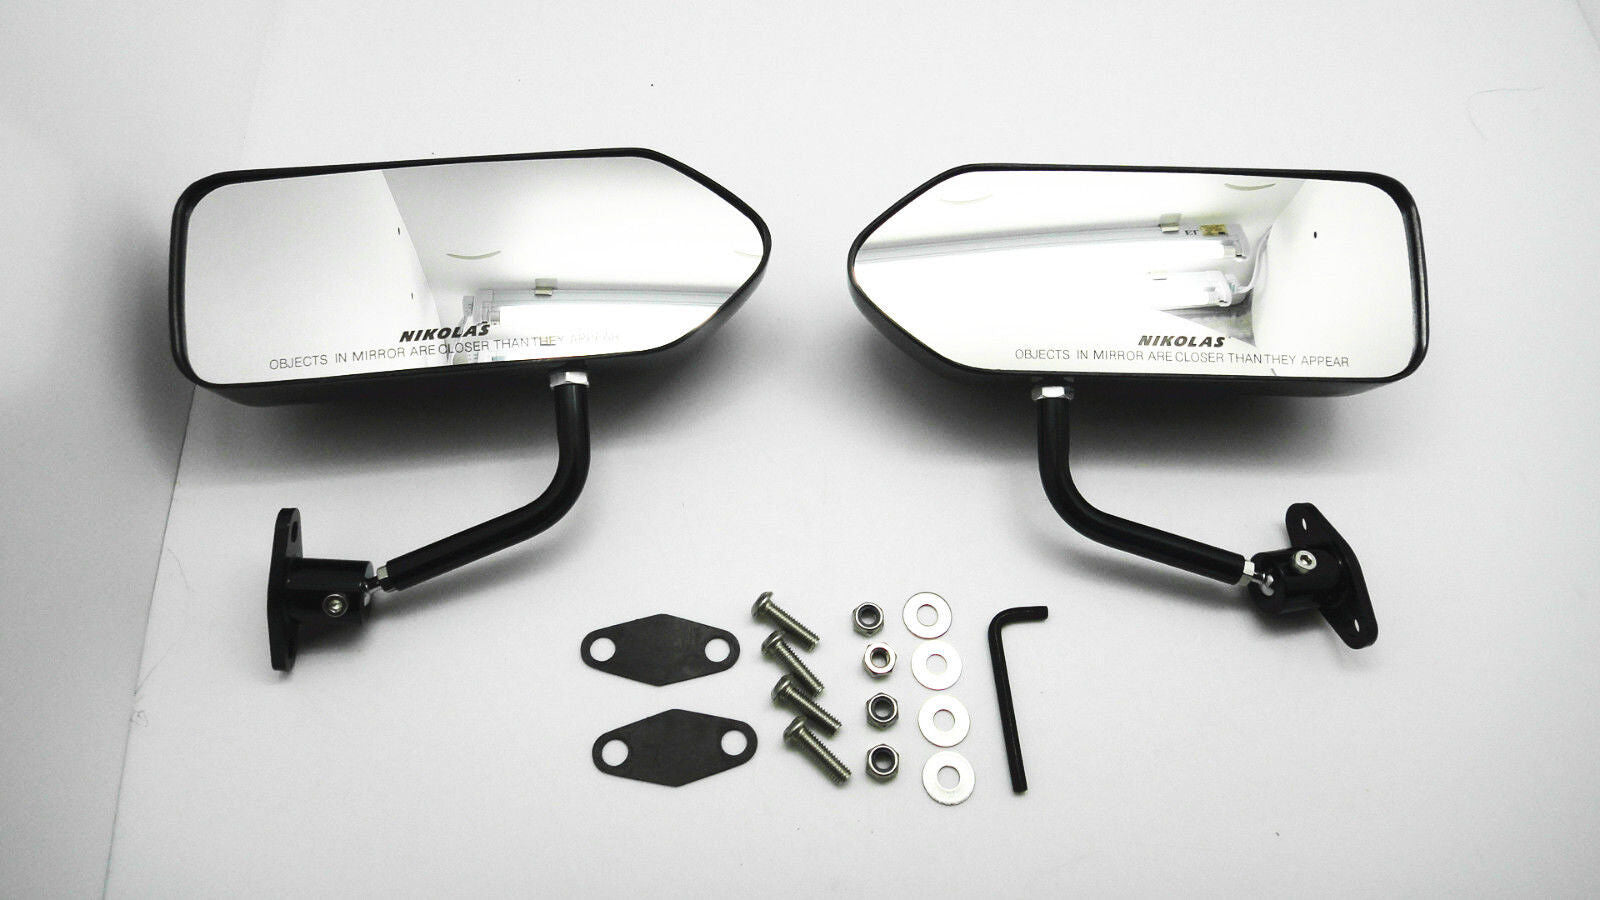 Custom GP Carbon Race Small Mirrors Auto/Bike F1 Type Kit Side Wing Pair RH+LH